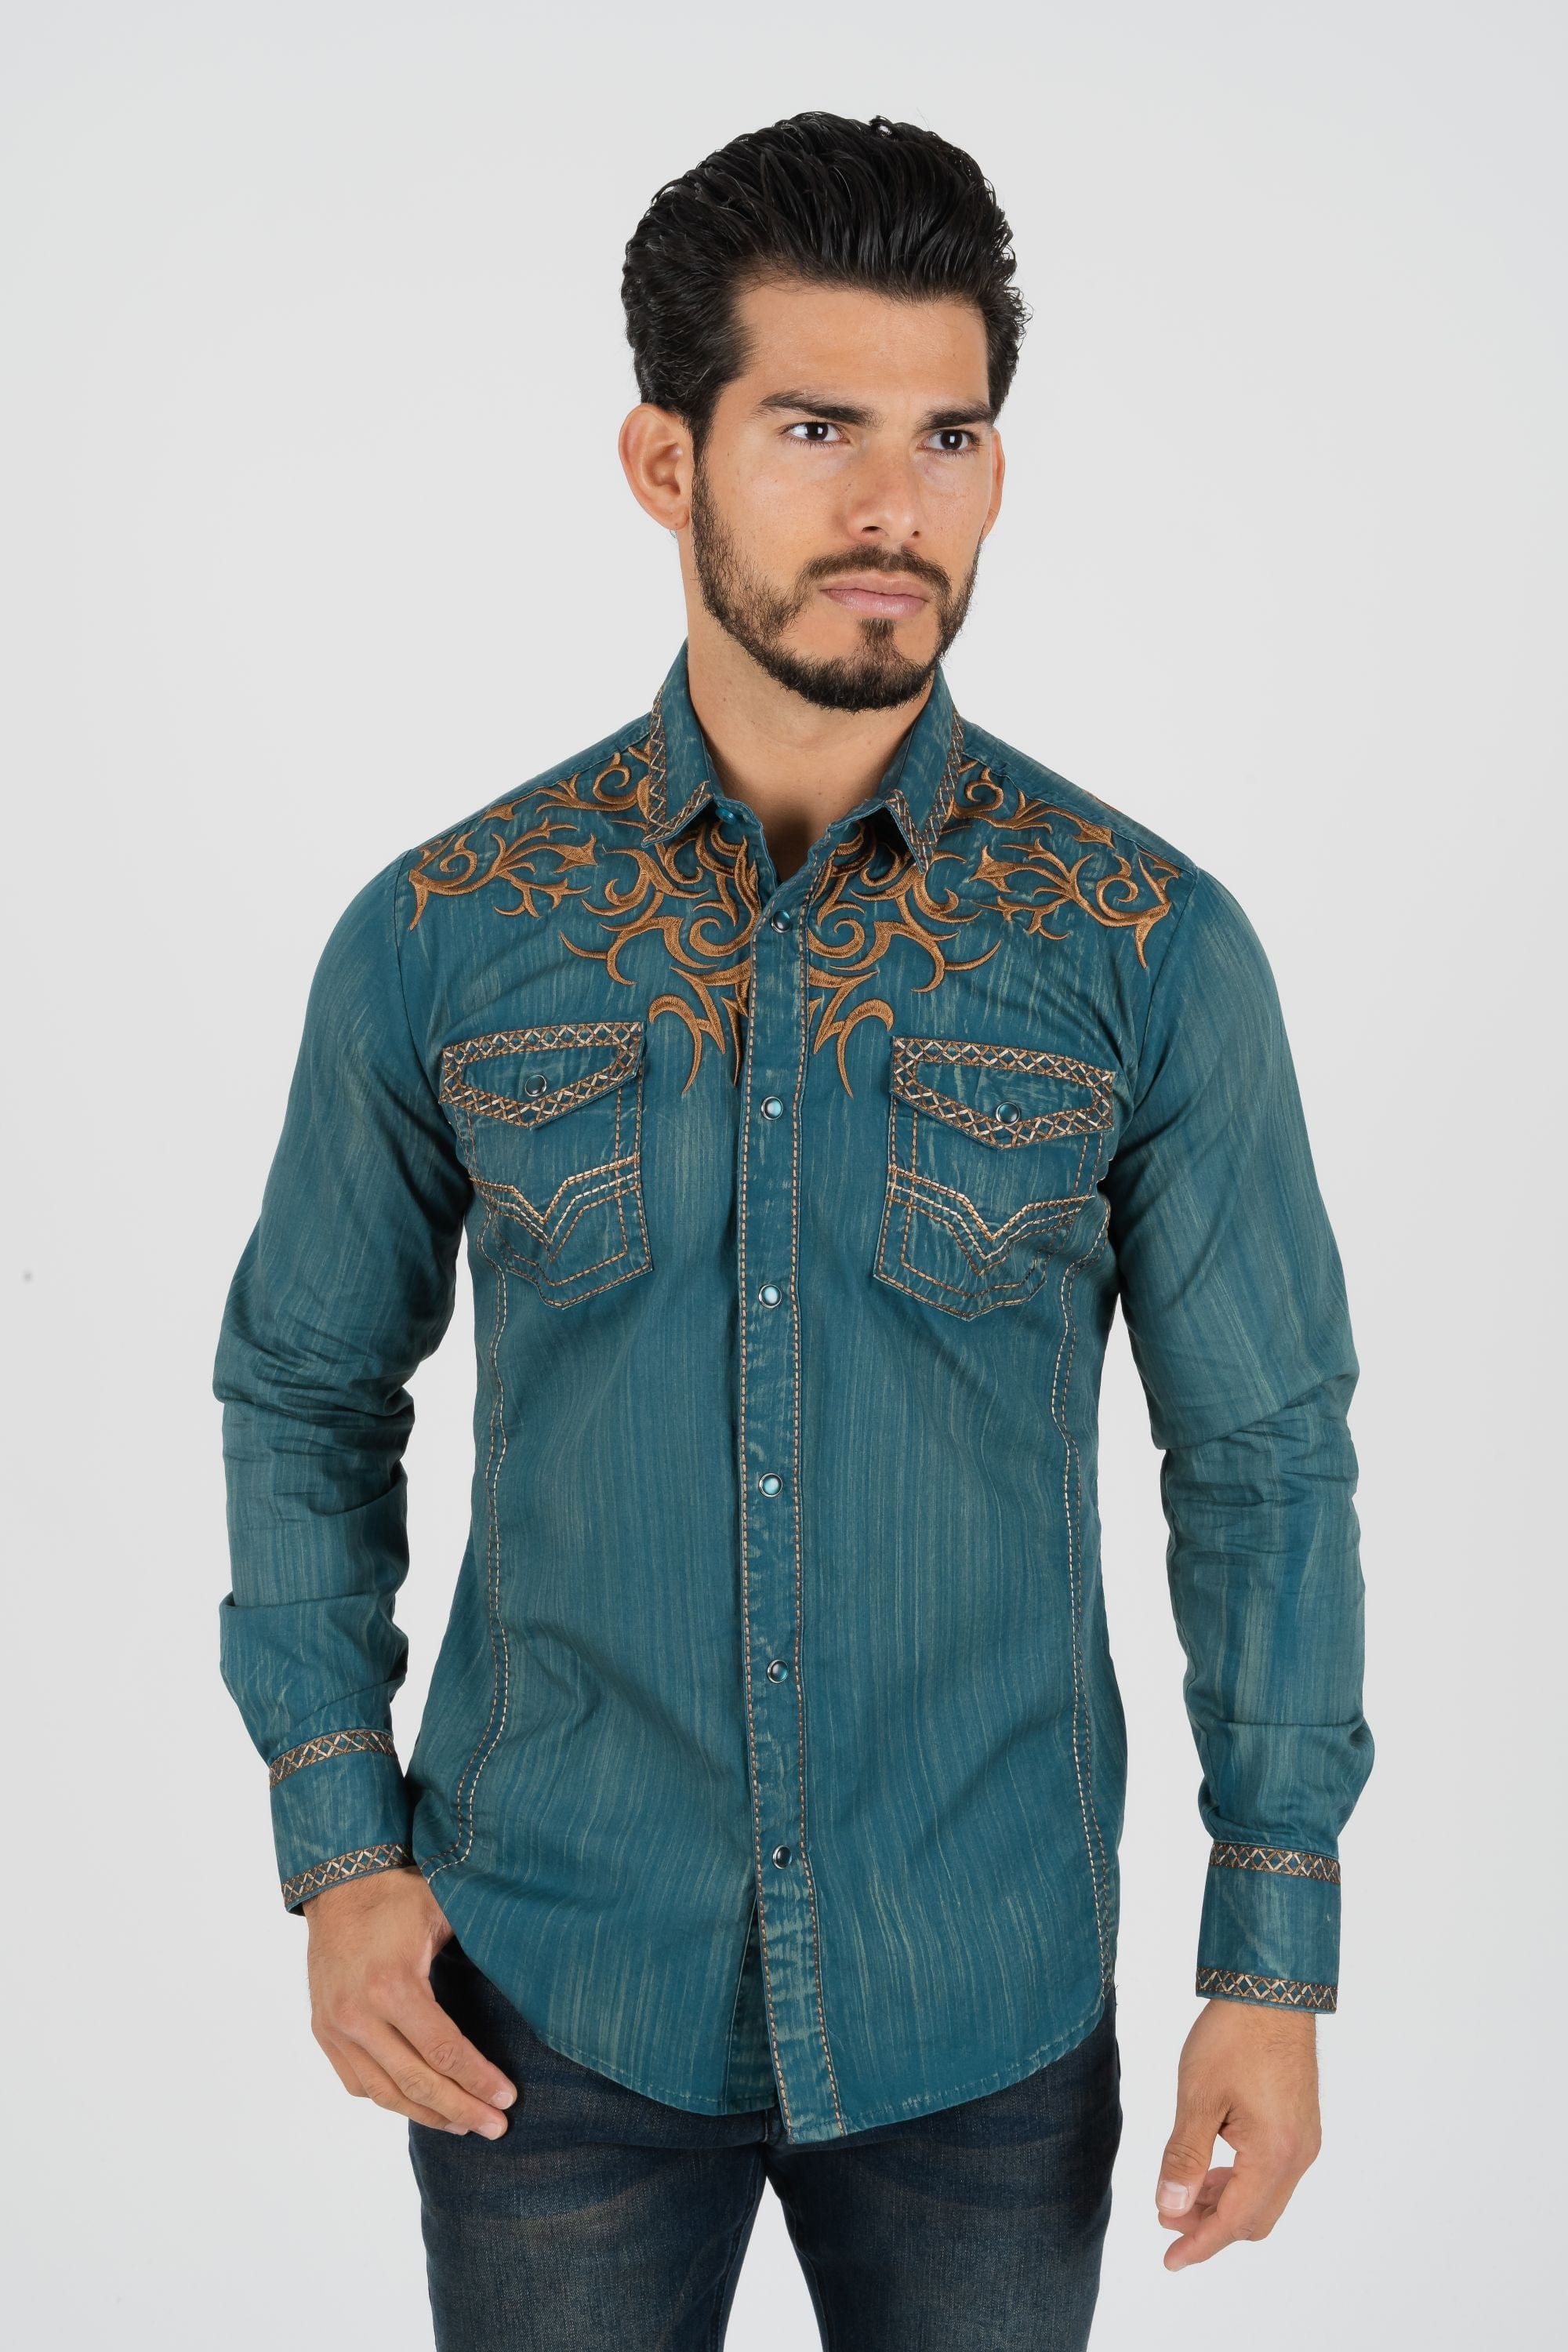 Platini Fashion Shirts Men's Cotton Teal Embroidery Western Shirt